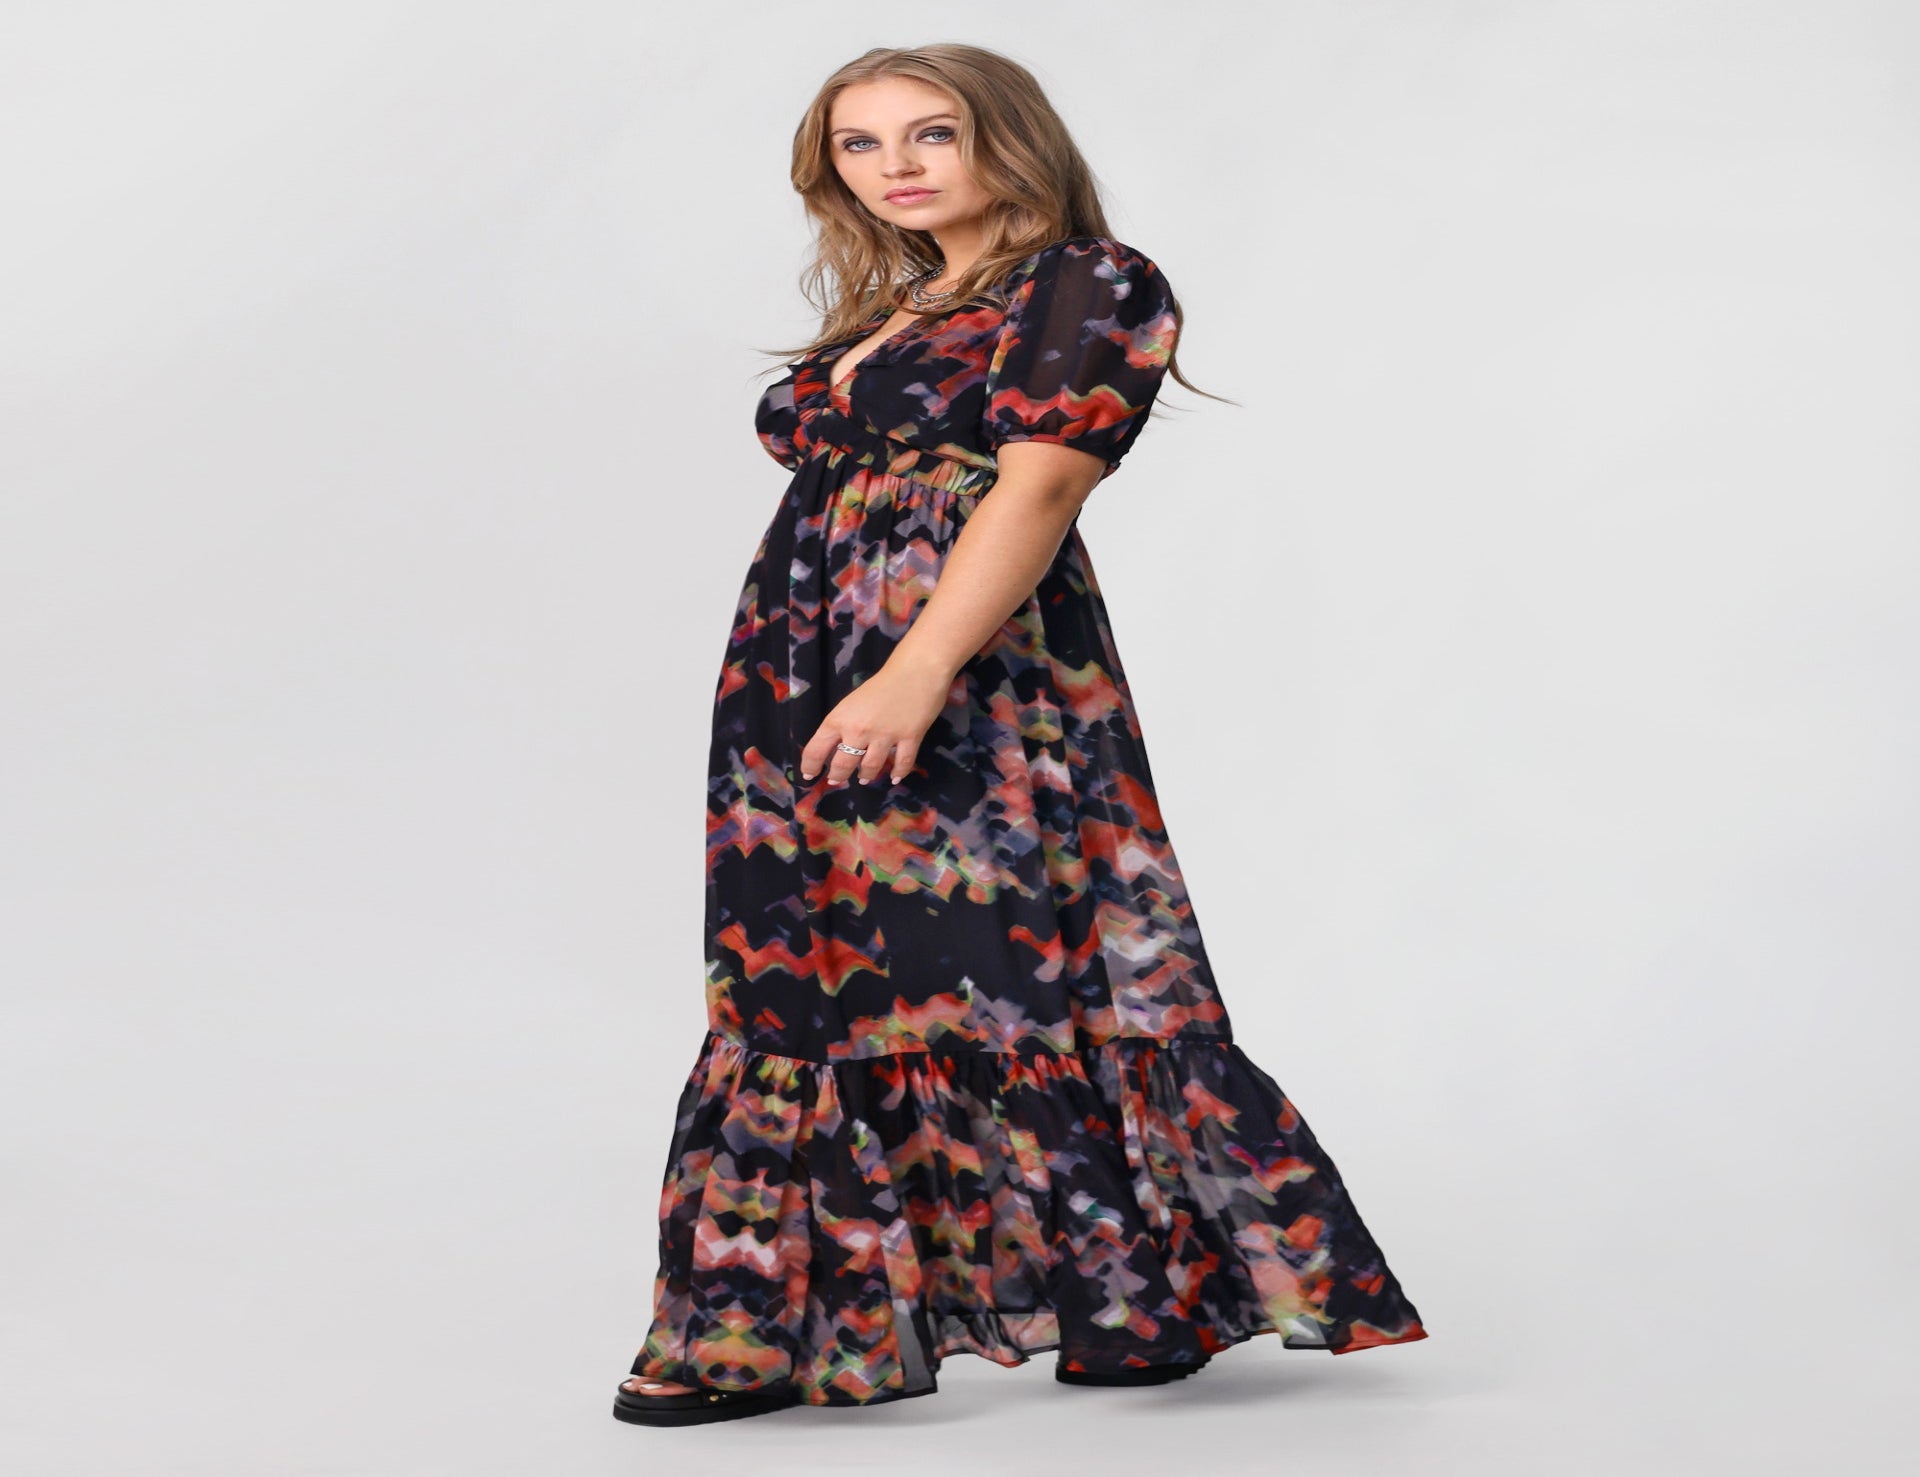 Hybrid Print Maxi Dress - Multi - Dress - Maxi - Women's Clothing - Storm